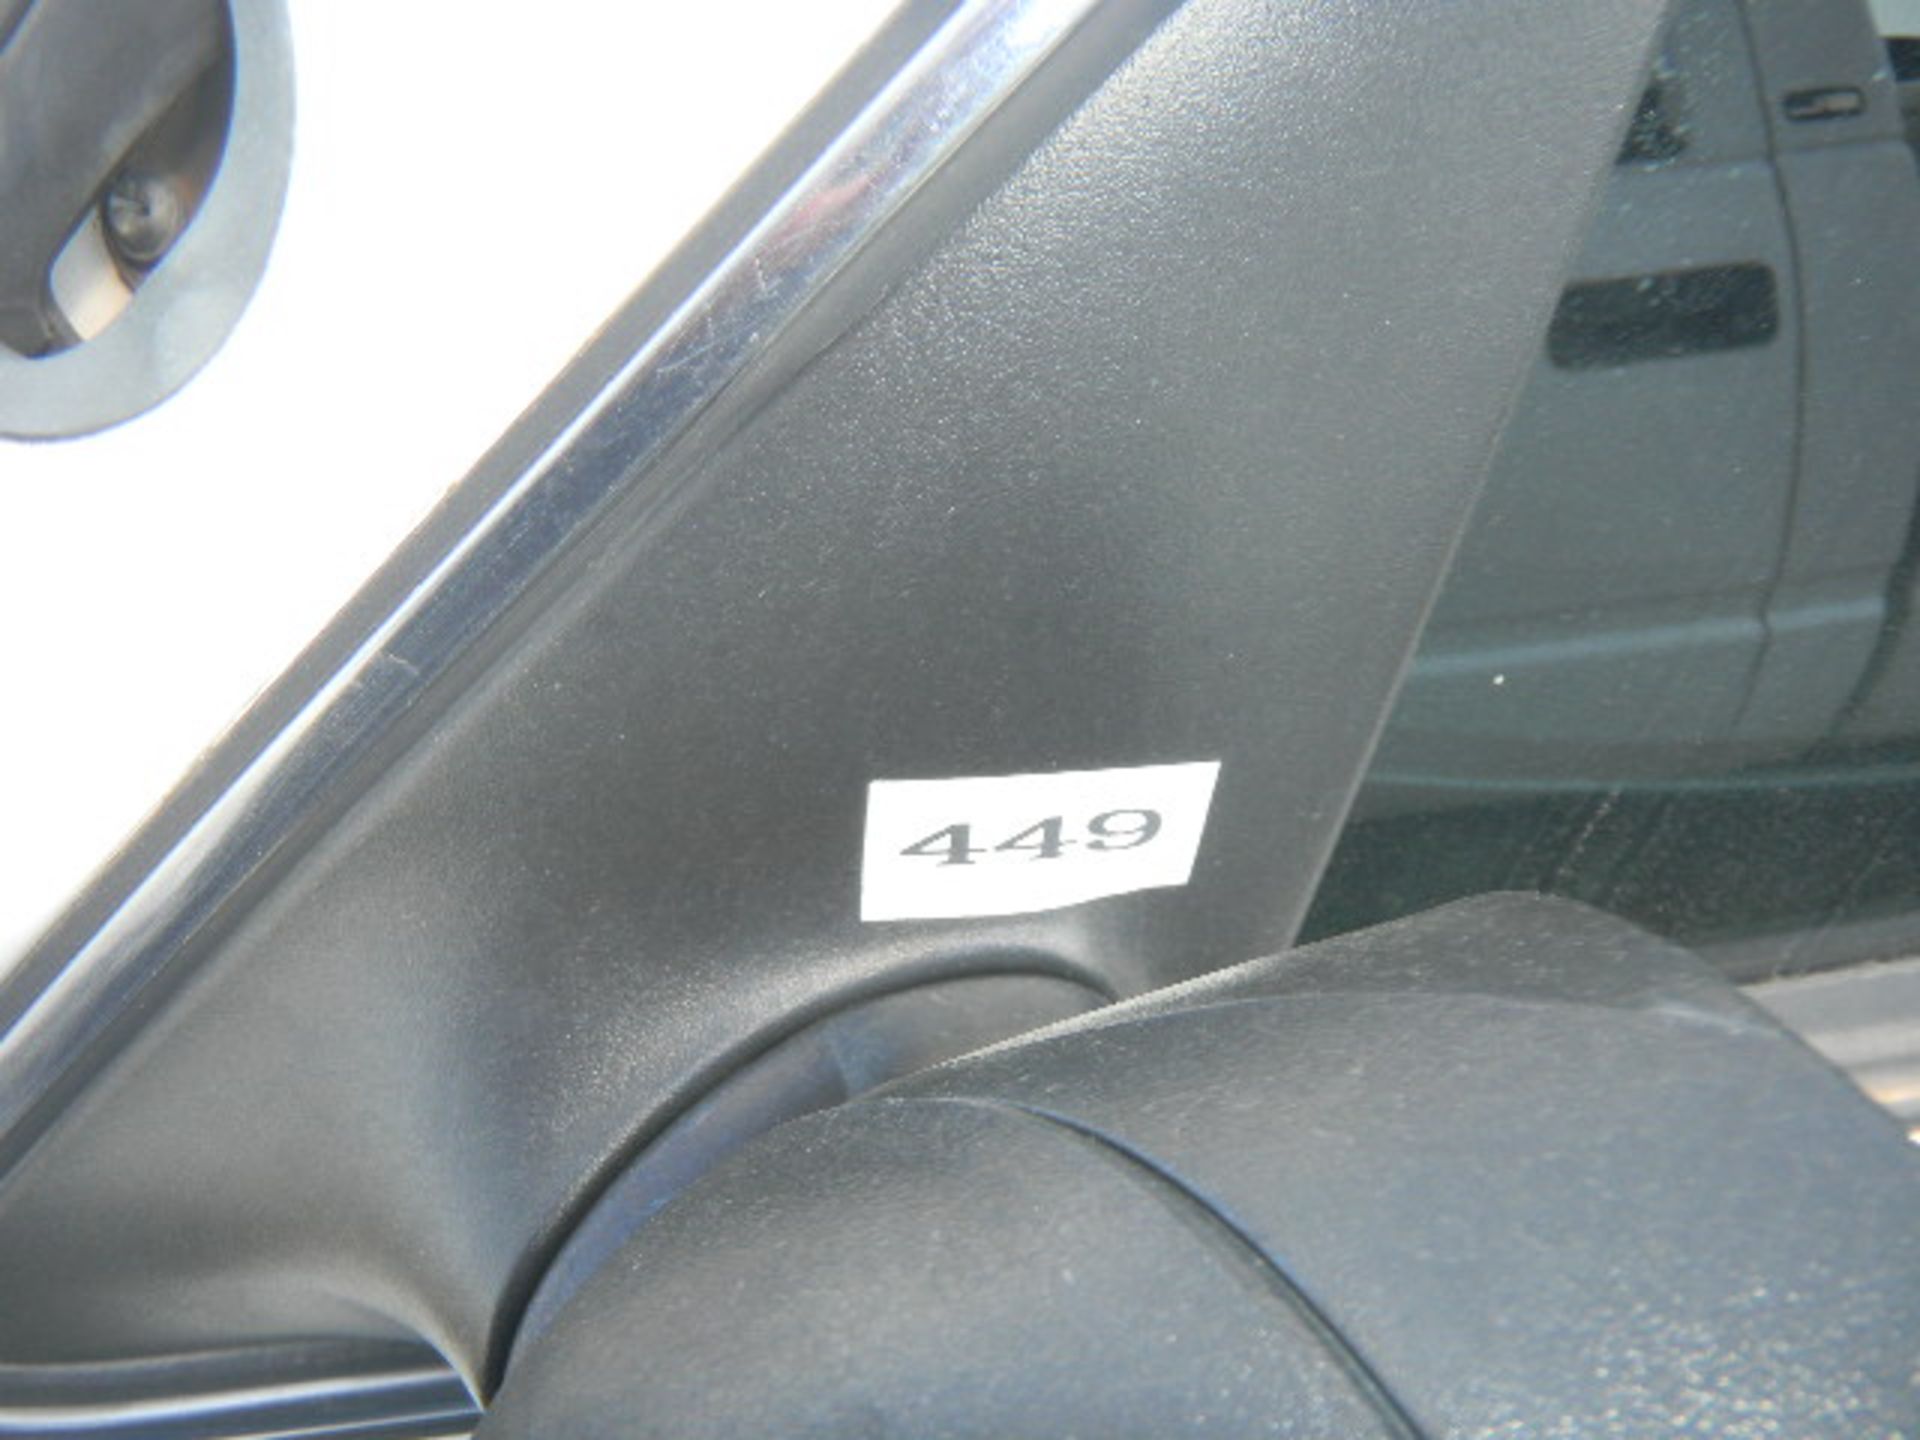 2008 Ford Crown Vic B/White Patrol Car - Asset I.D. #449 - Last of Vin (114900) - Image 6 of 10